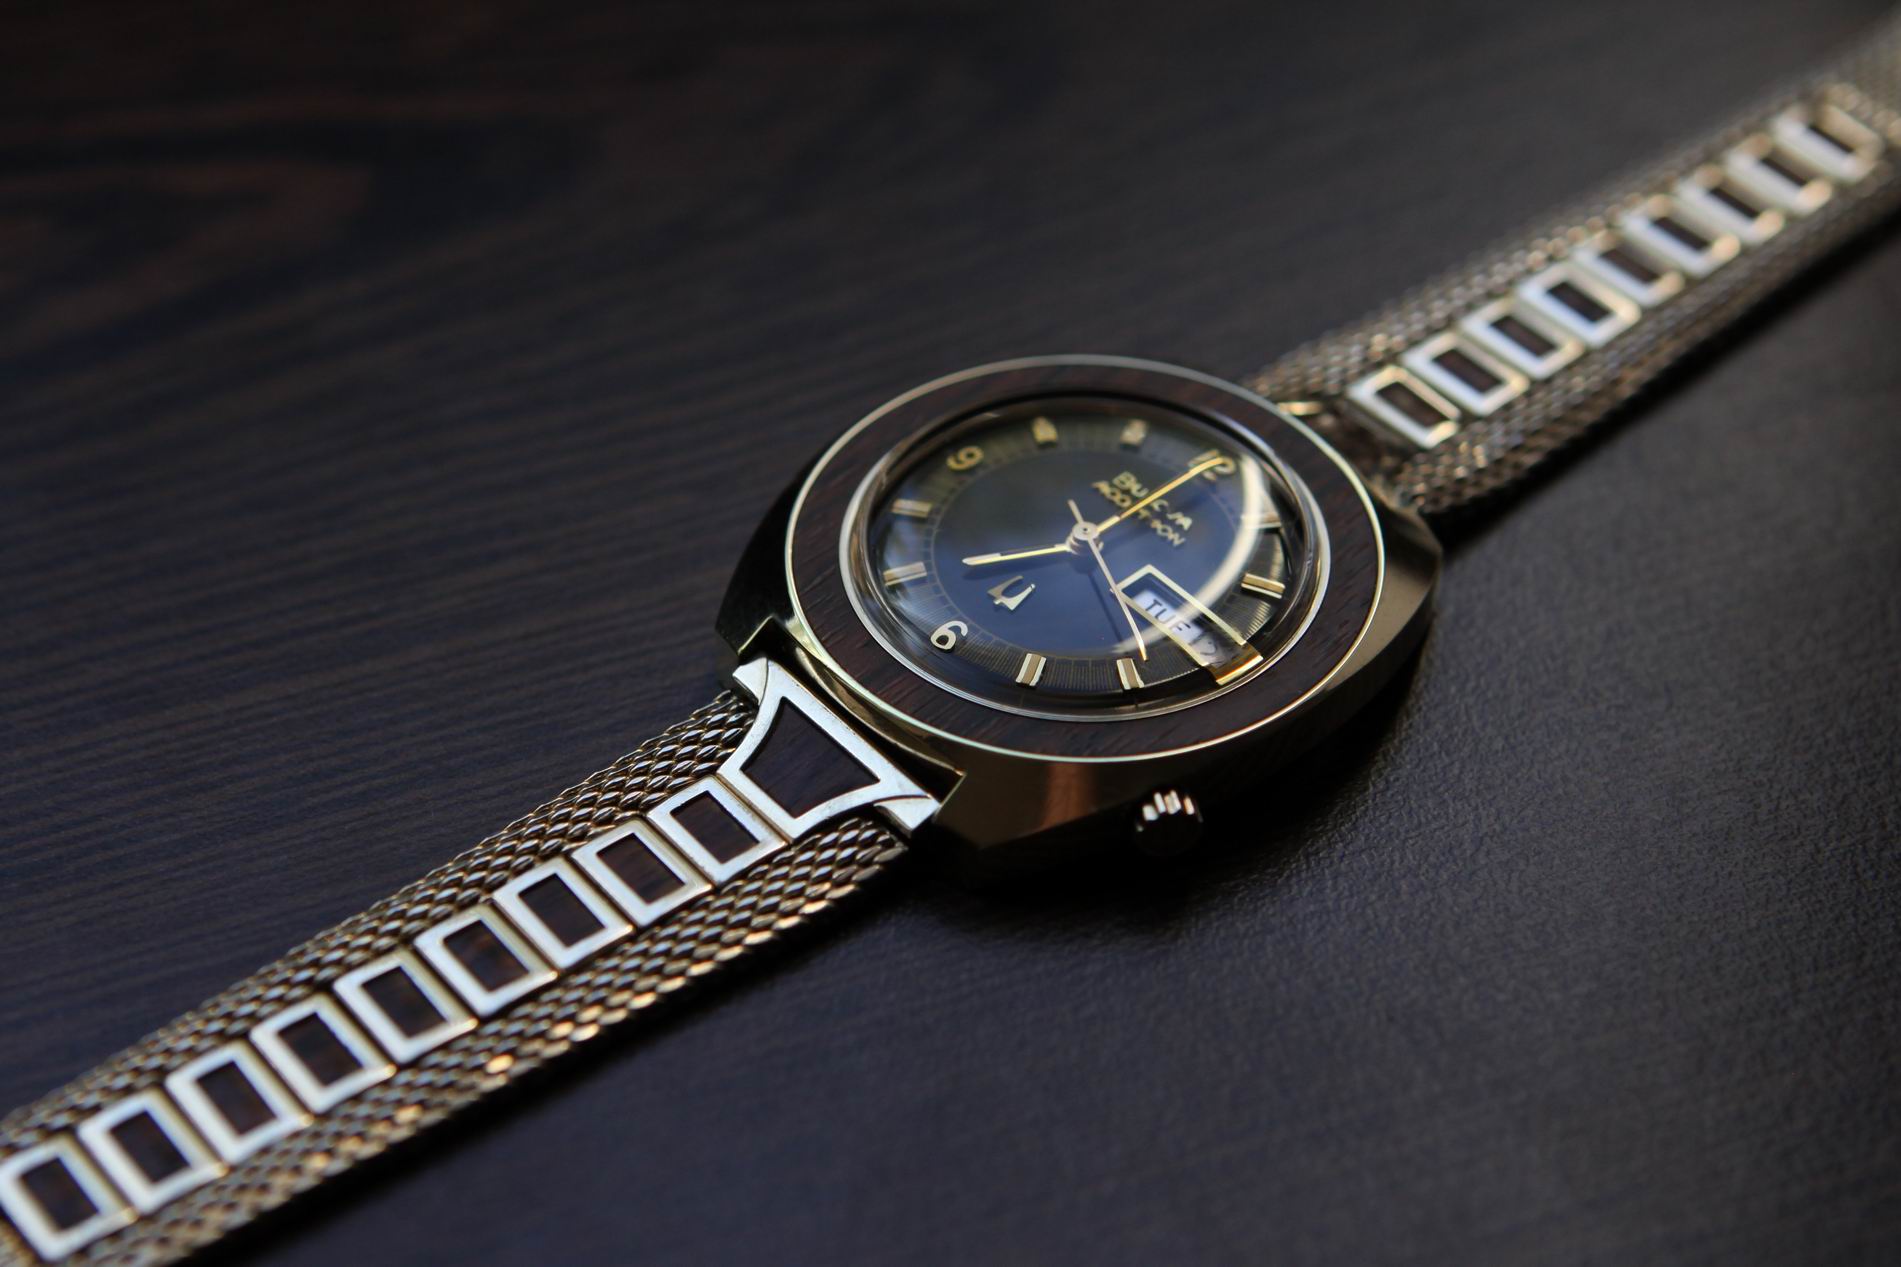 1974 Bulova watch